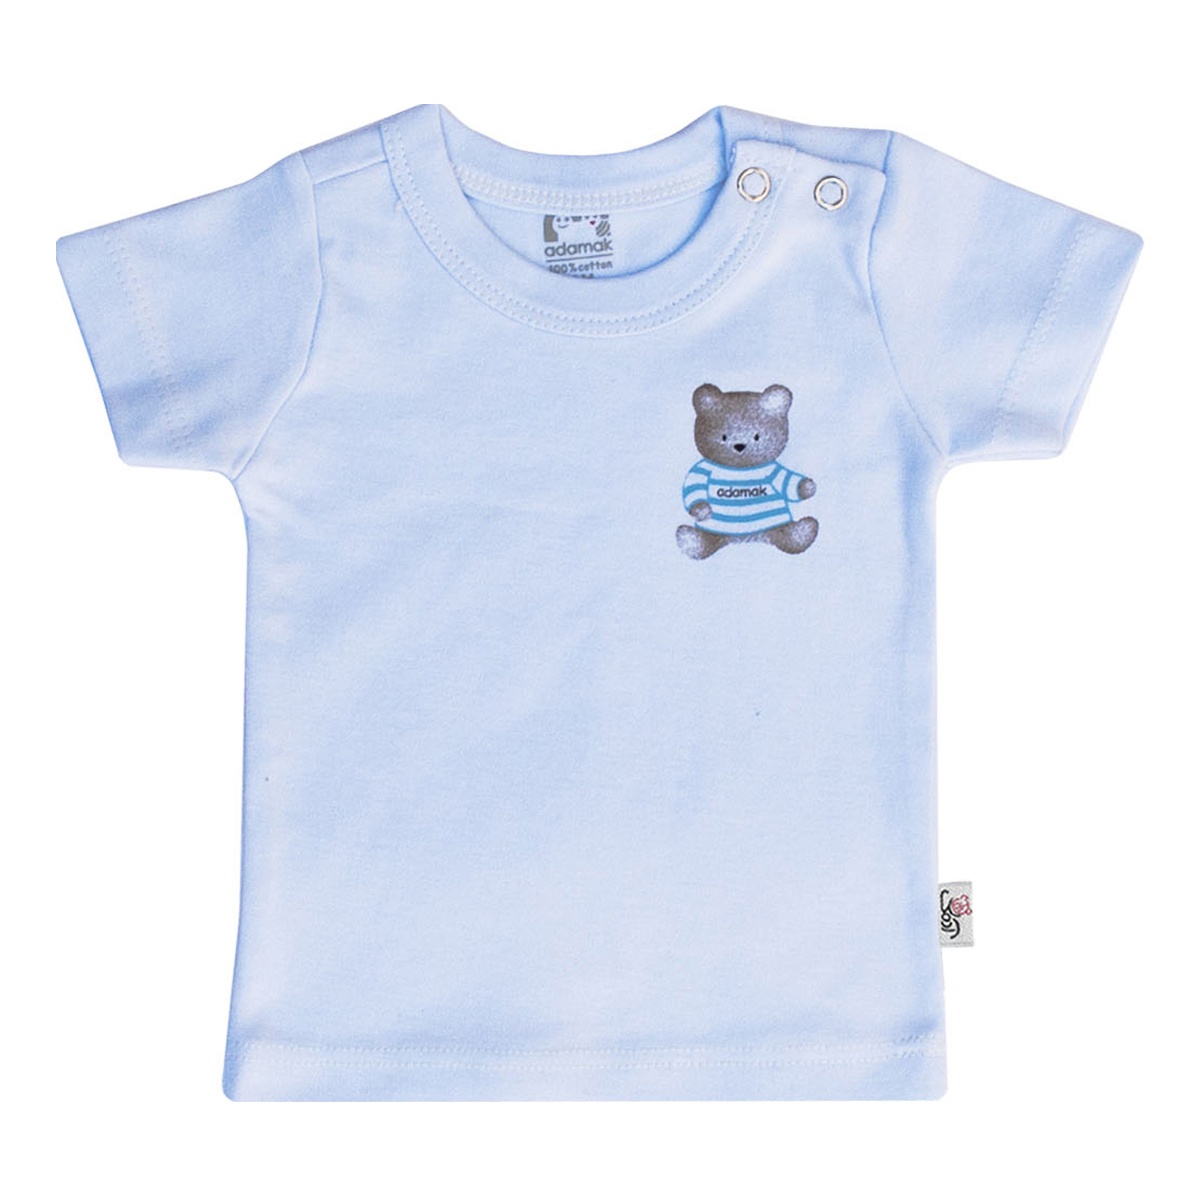  تی شرت آستین کوتاه نوزاد آدمک طرح خرس رنگ آبی